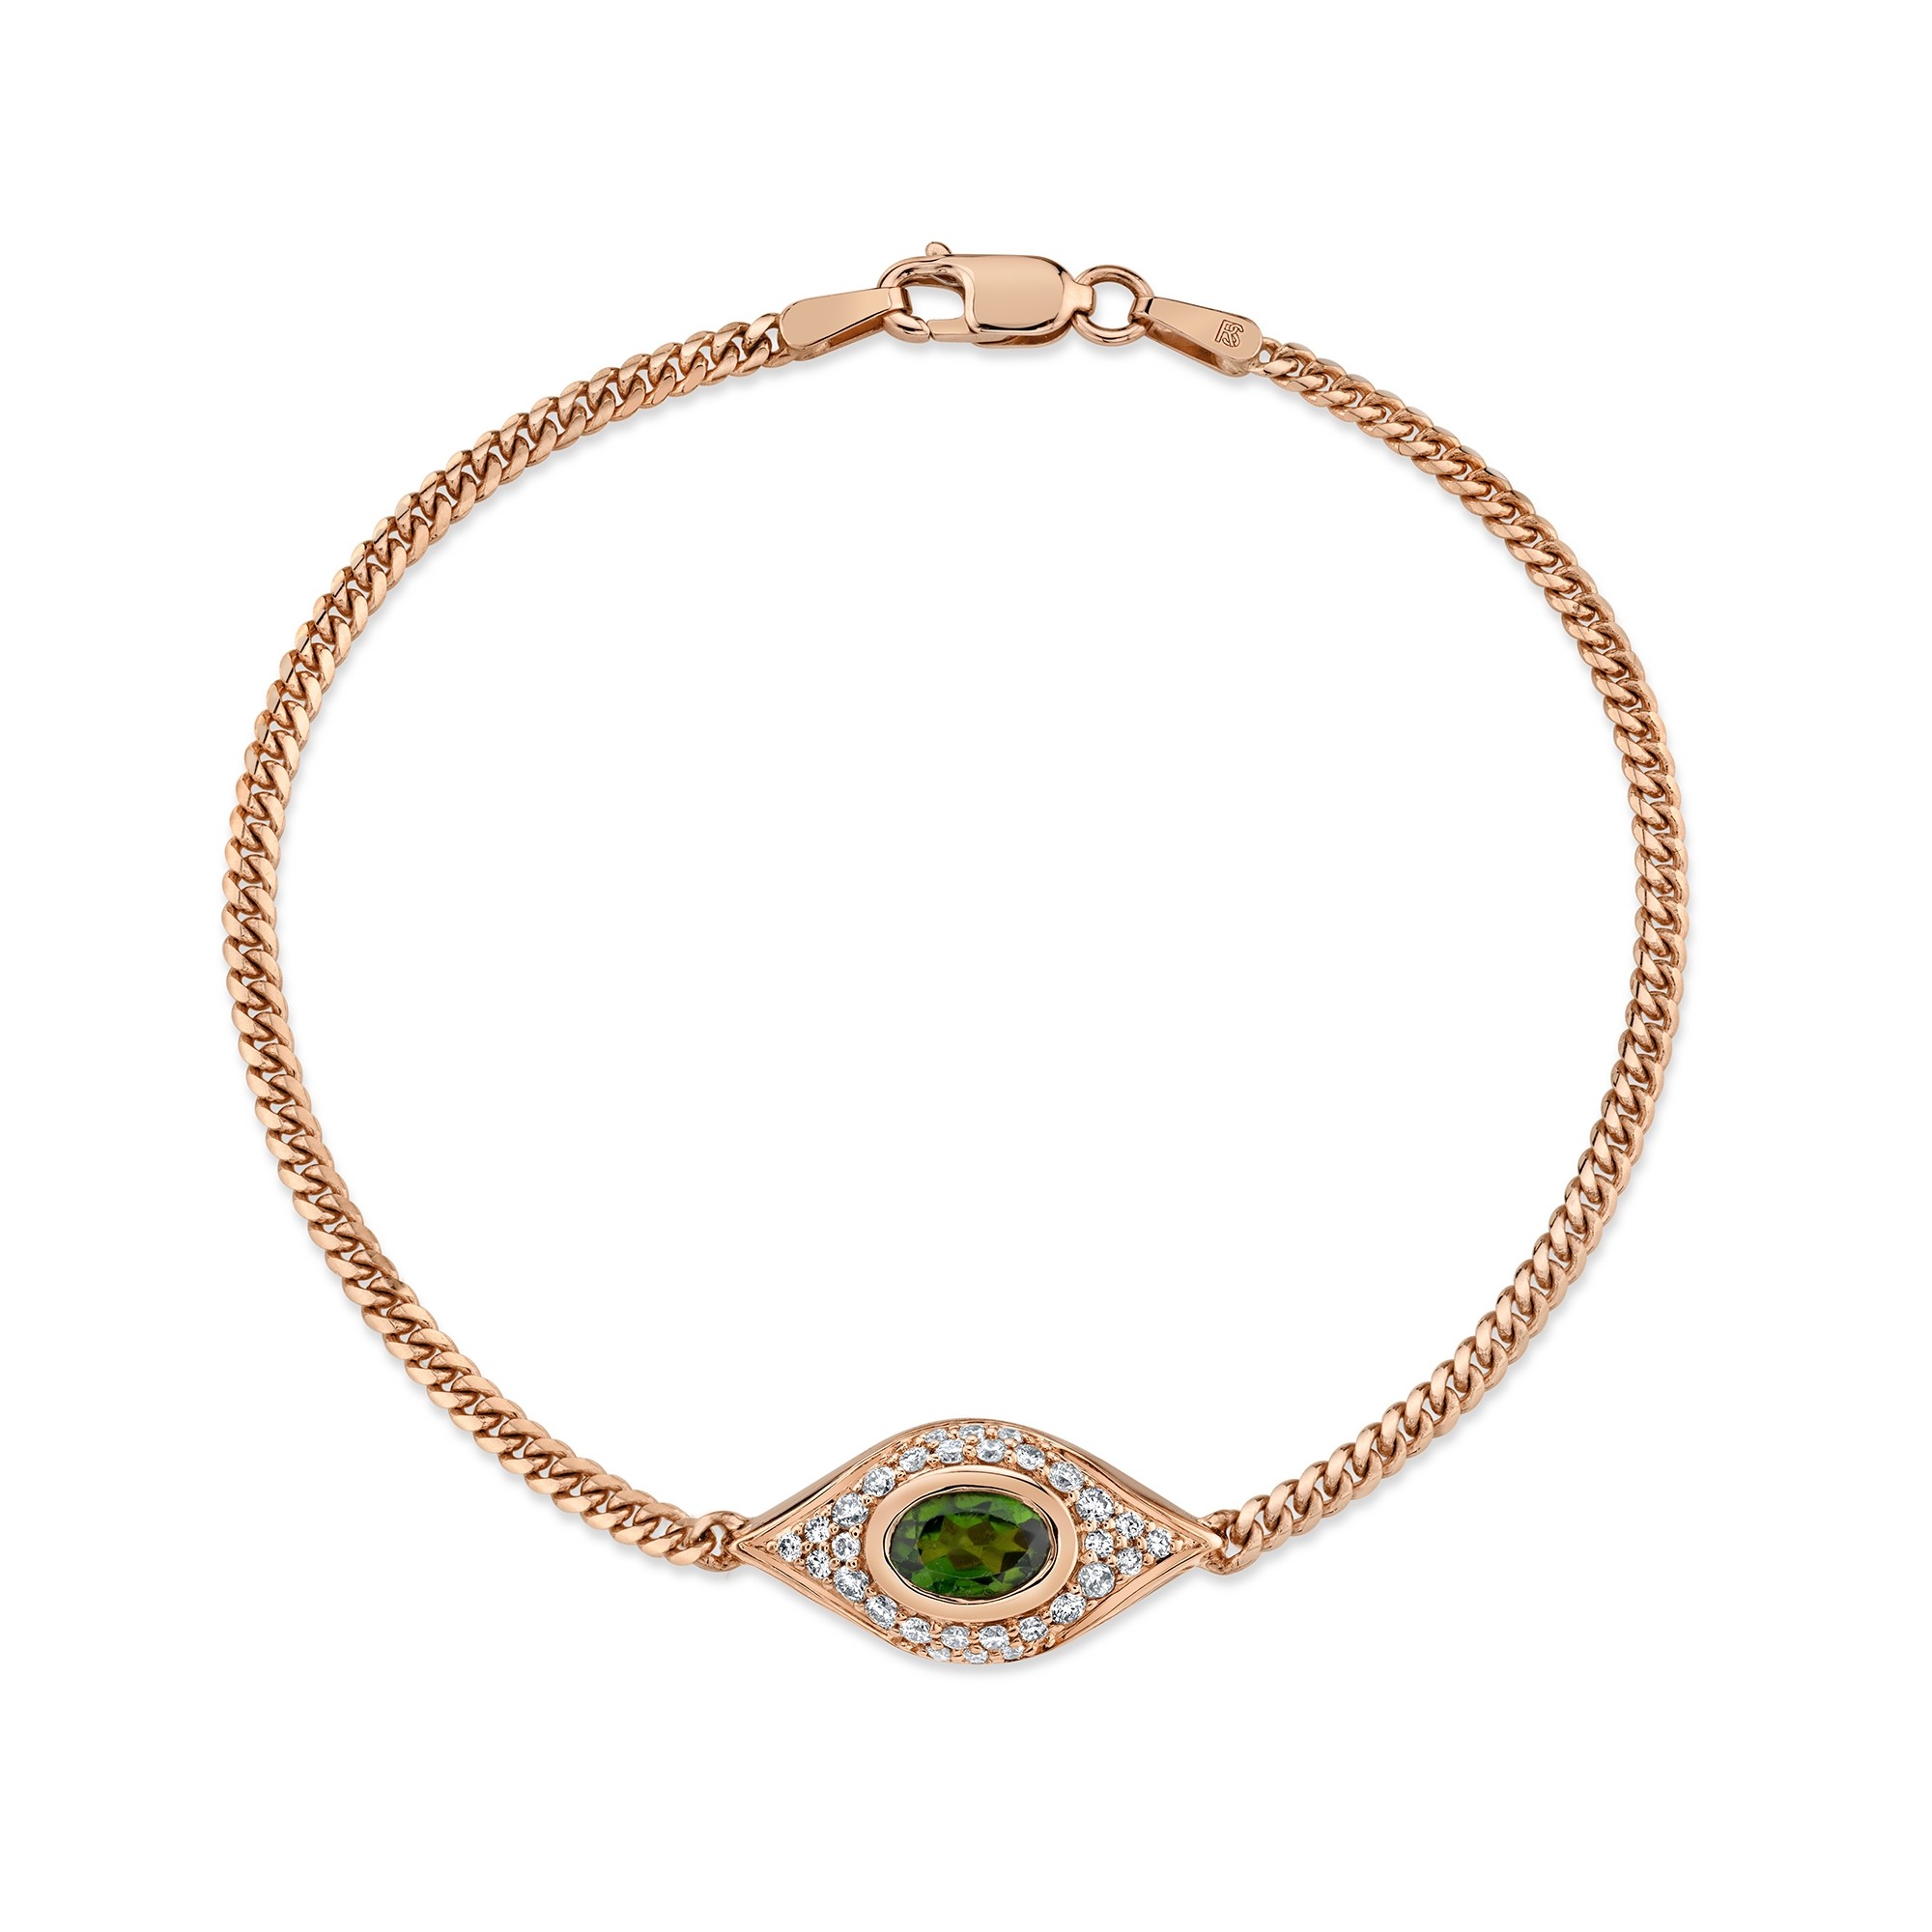 Watermelon Tourmaline Bracelet Personalized Jewelry gift with initials